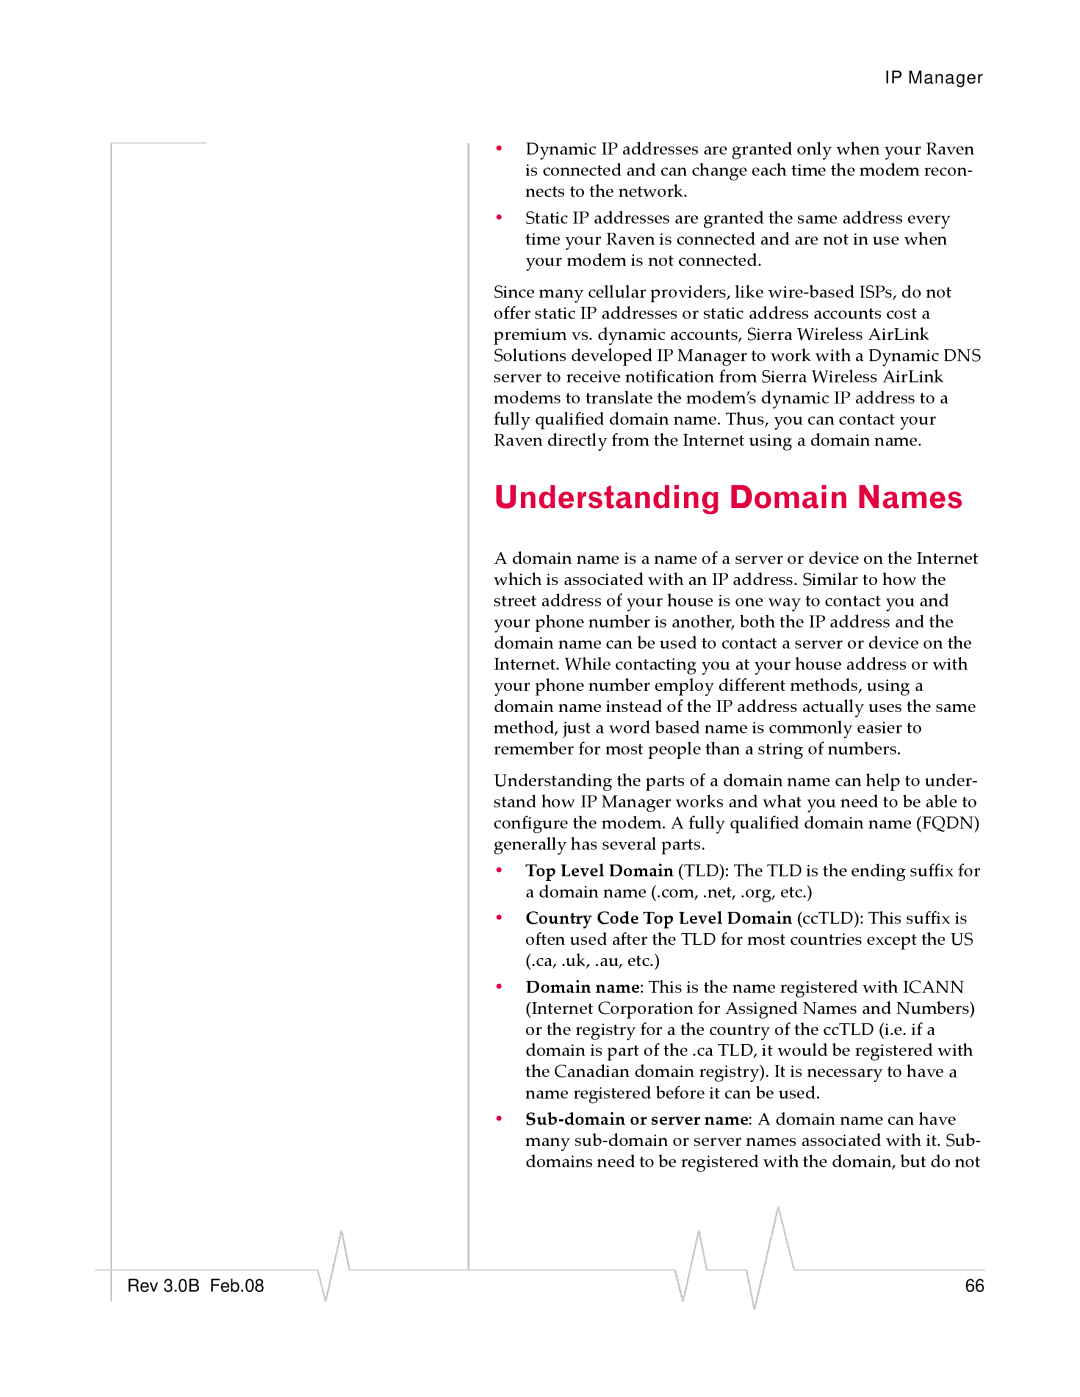 Sierra Wireless 20070914 manual Understanding Domain Names 